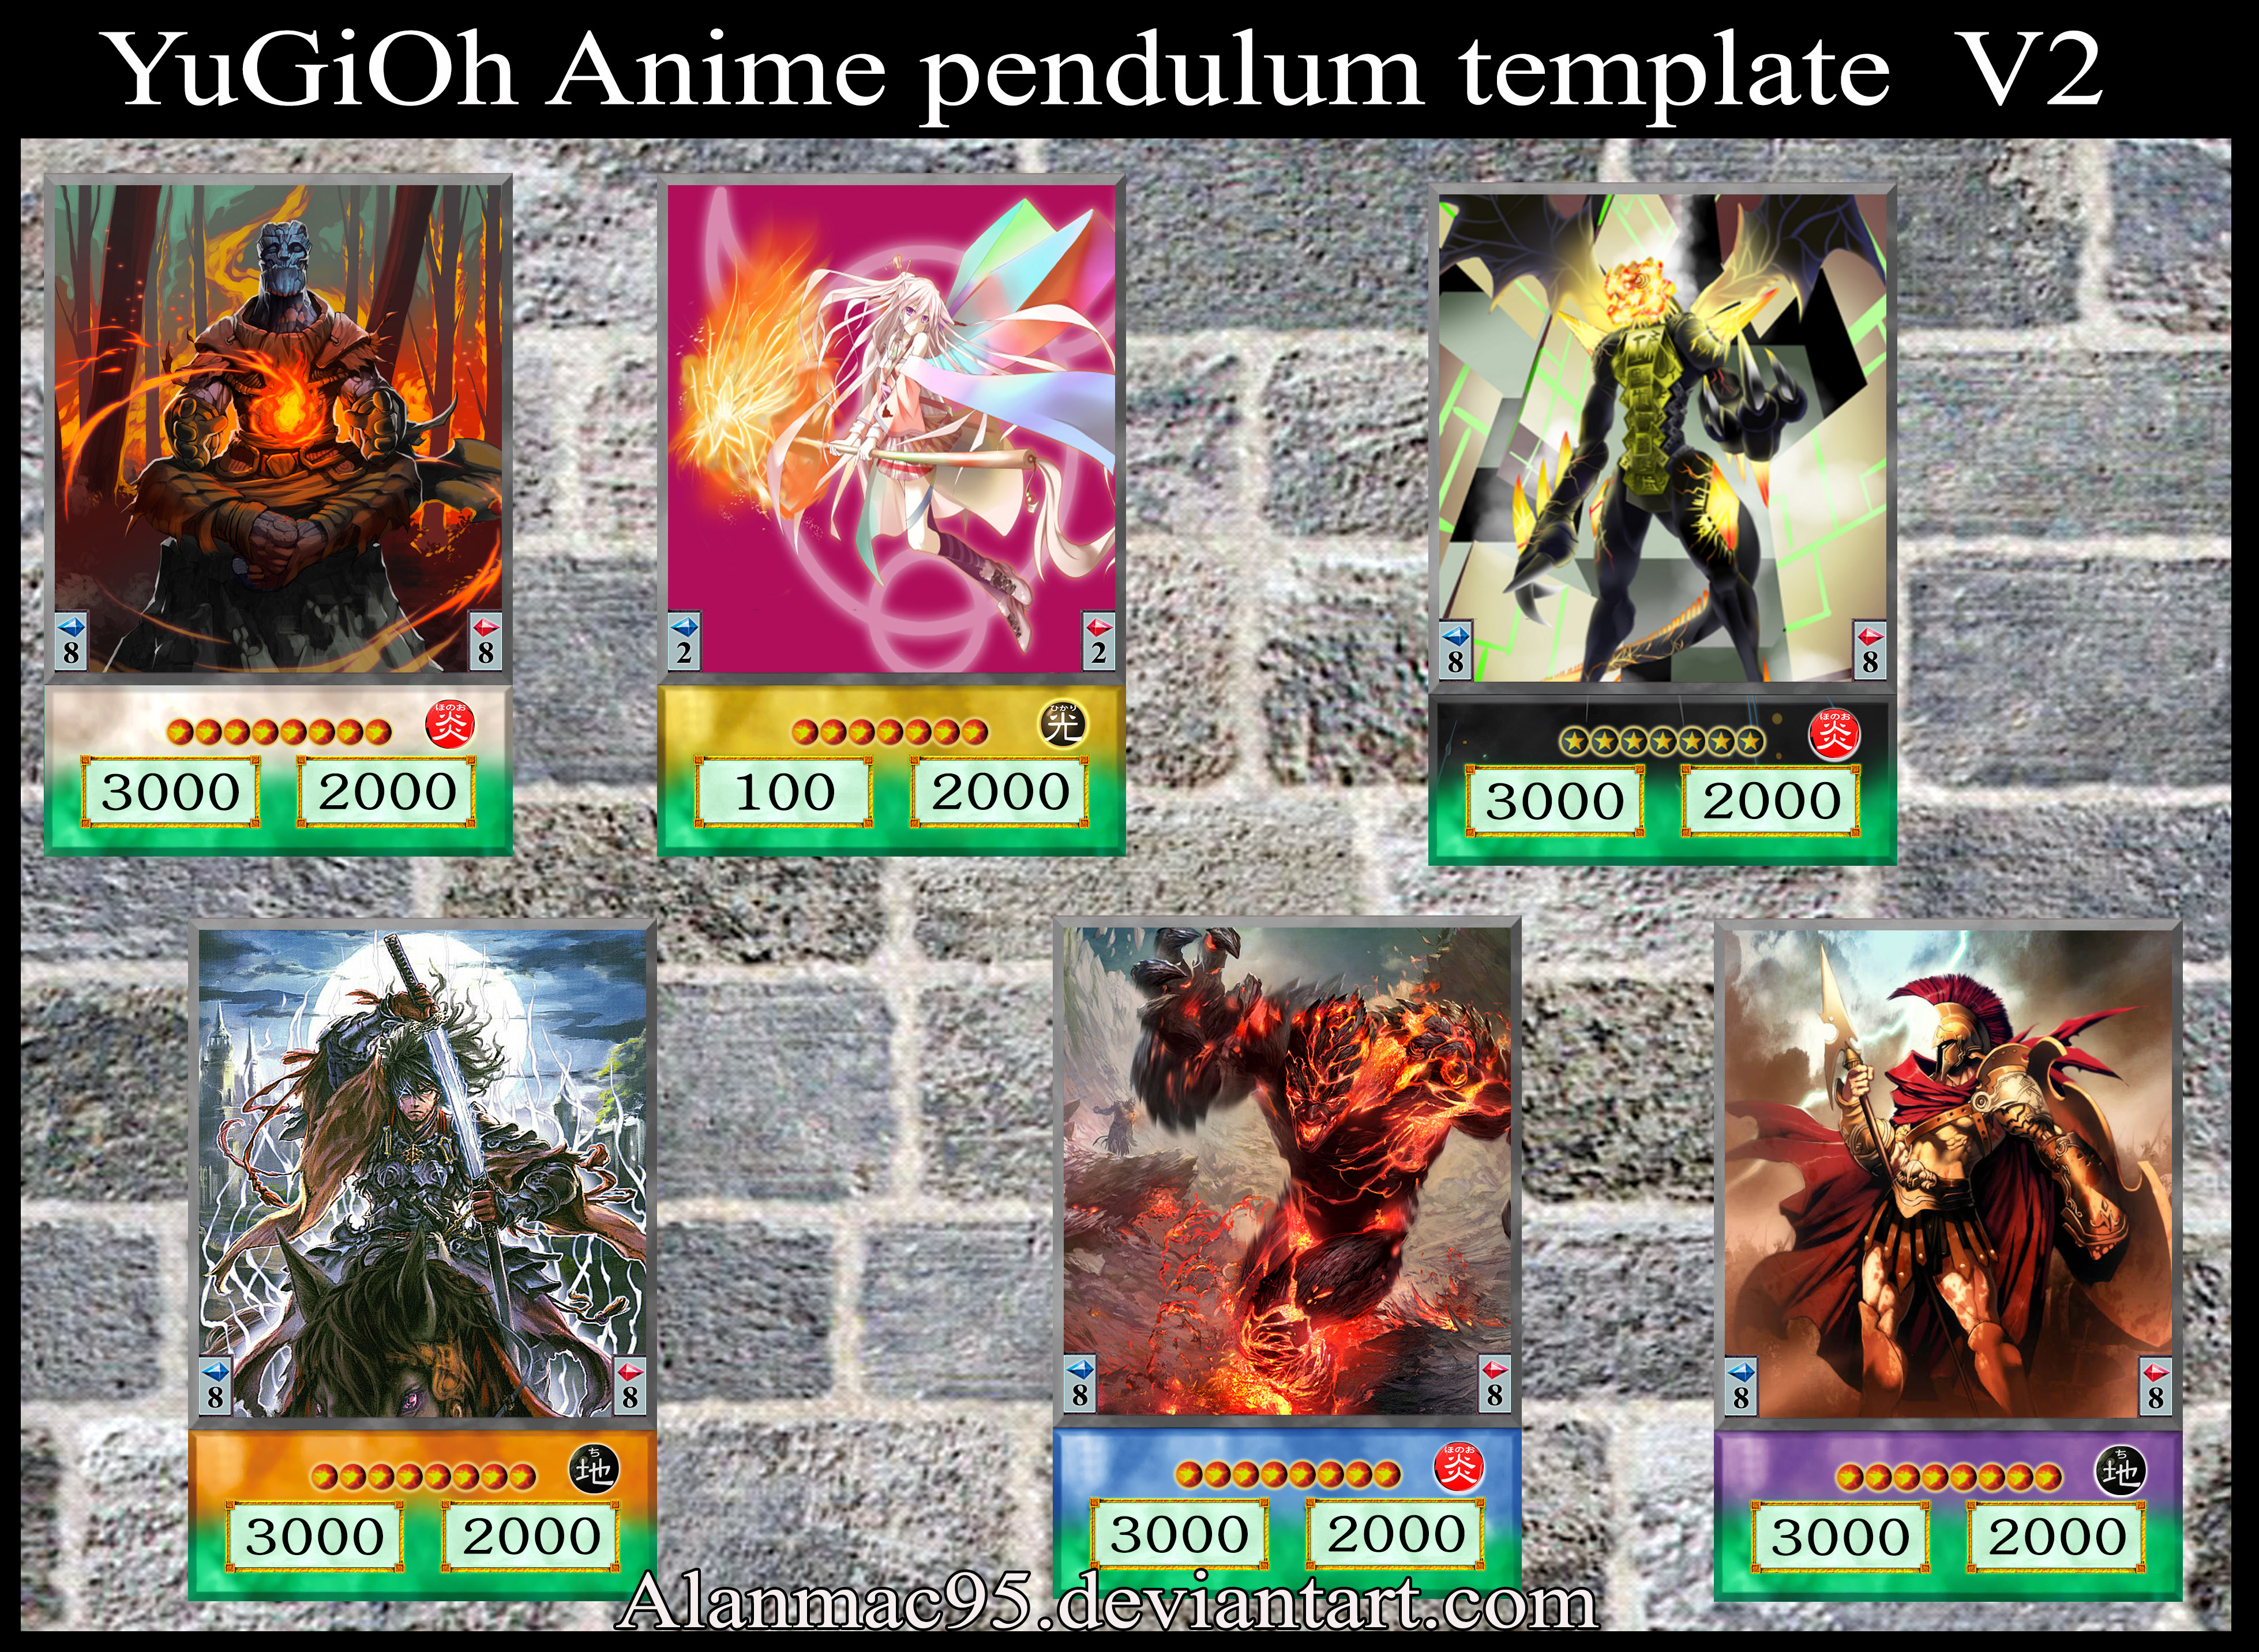 YuGiOh Anime pendulum template V2 by AlanMac95 on DeviantArt